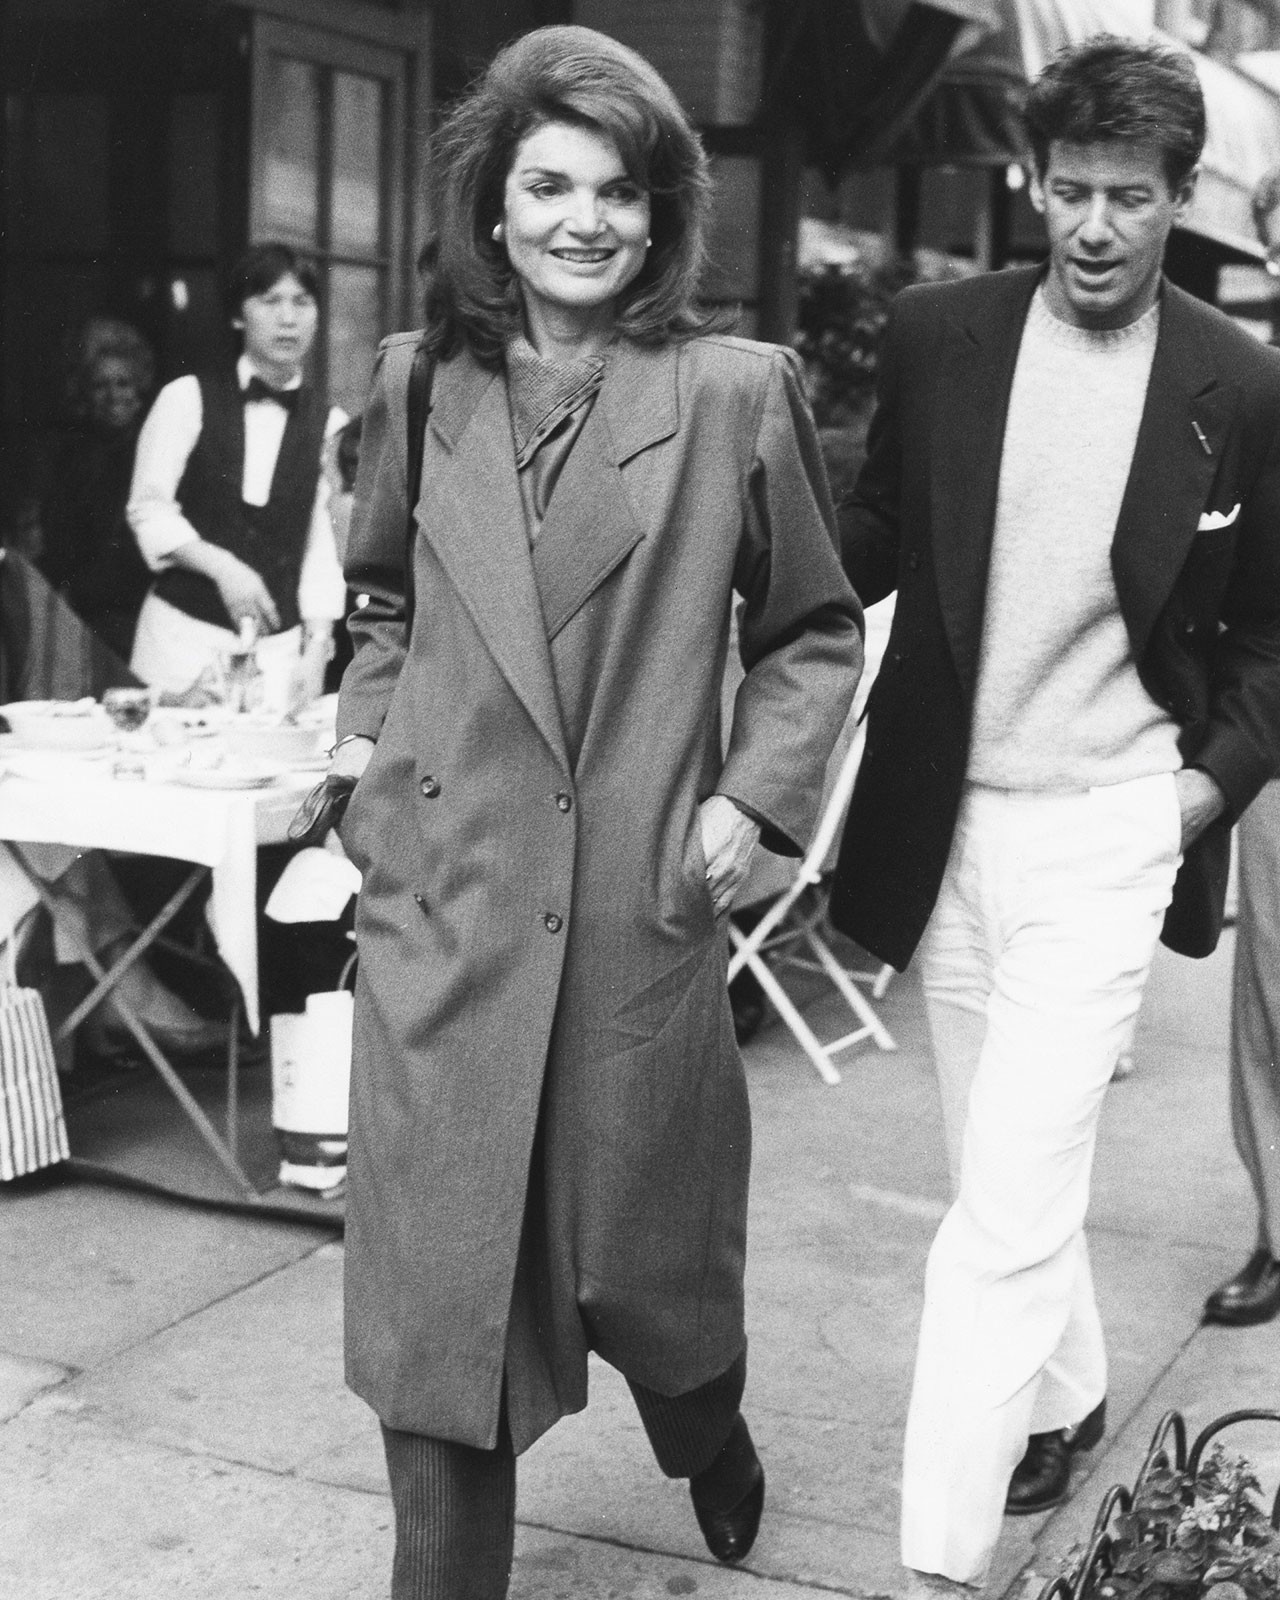 Жаклин Кеннеди Онассис и Кельвин Кляйн, 1987. Фотограф Билл Каннингем